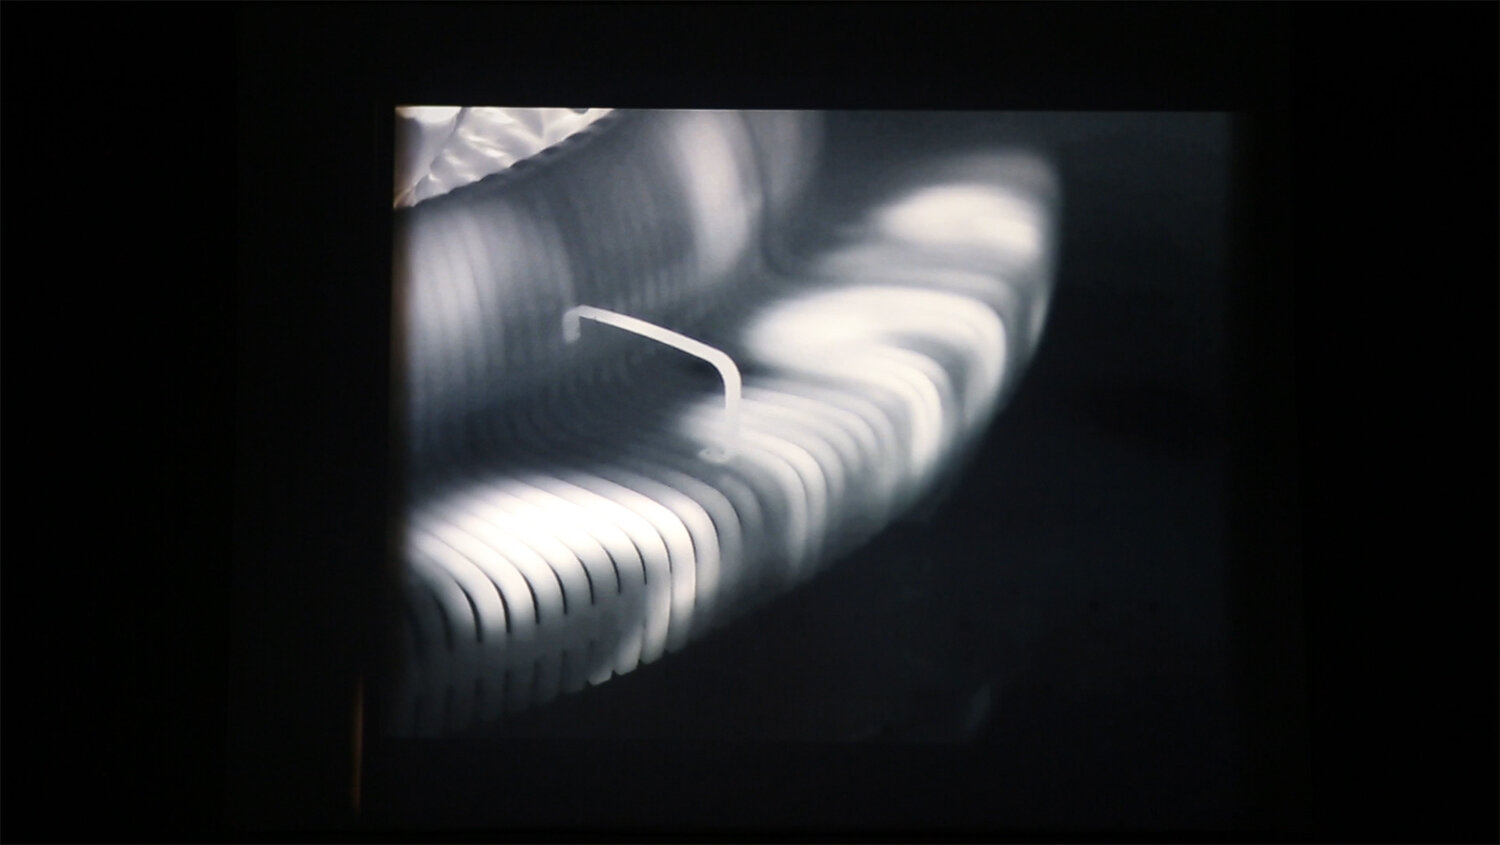   Interbeing,  Kalbjerga Film Festival, 35 mm film on carbon arc projector, 10 min 40 sec, 2018 